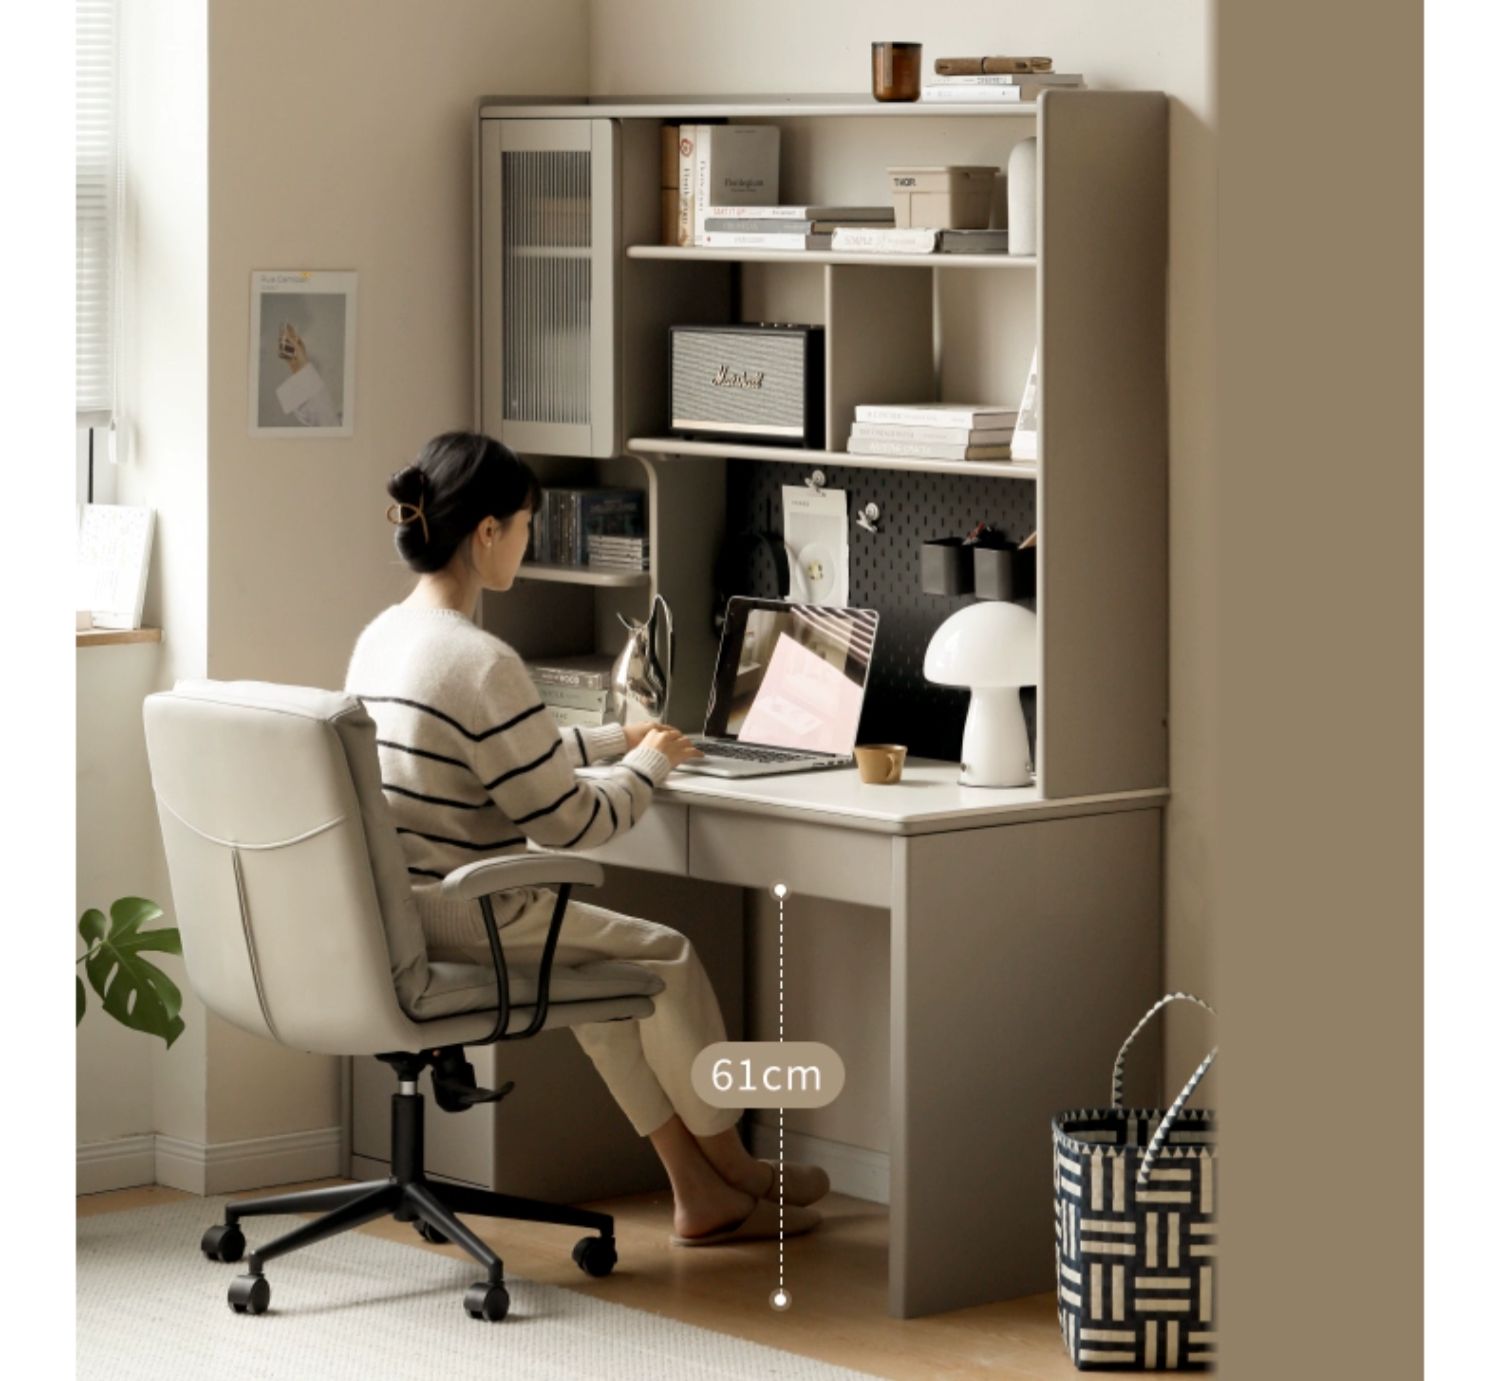 Poplar Solid wood Slate desk bookshelf integrated -